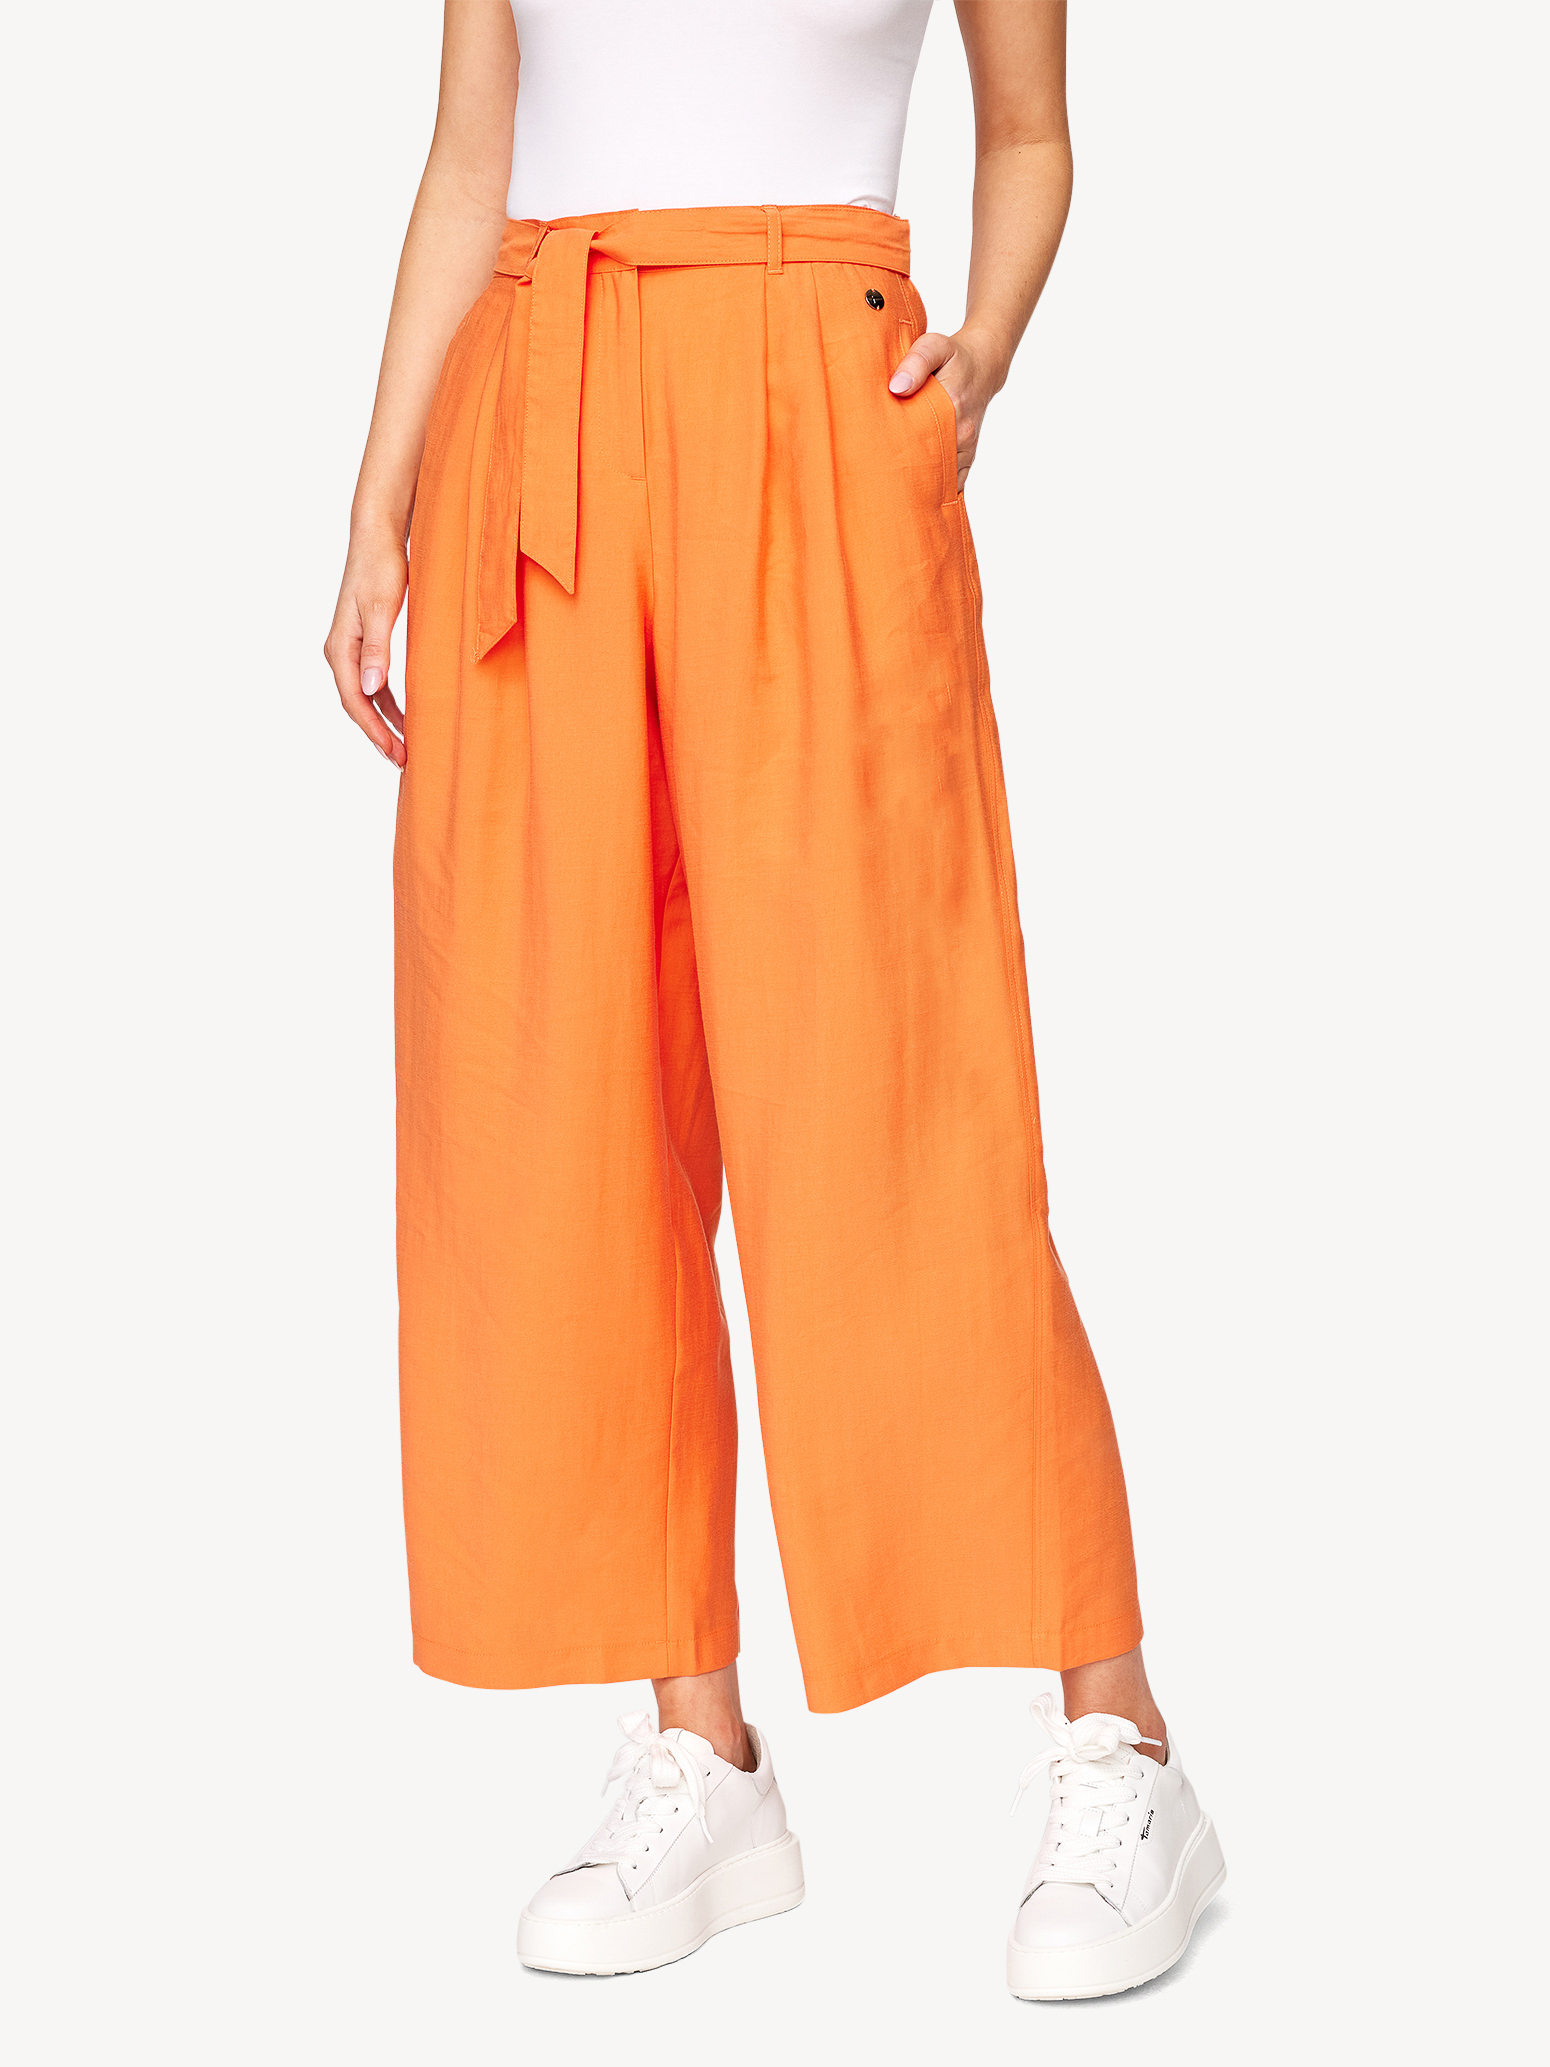 Hose - orange TAW0021-30035: Tamaris & Jeans kaufen! Hosen online